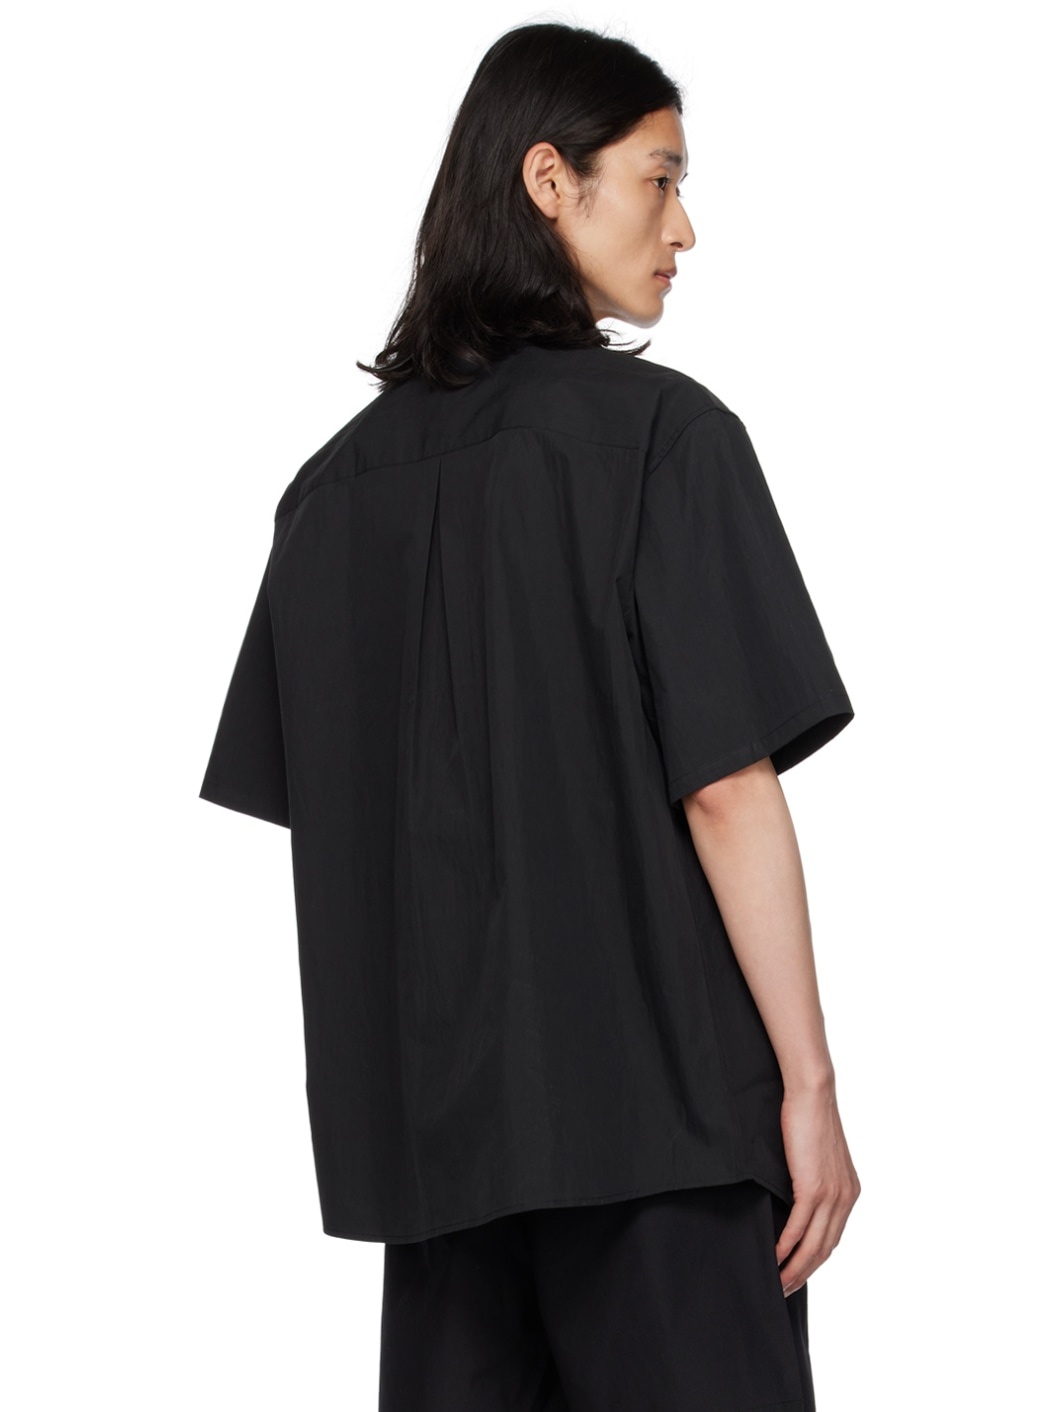 Black Cloak Shirt - 3